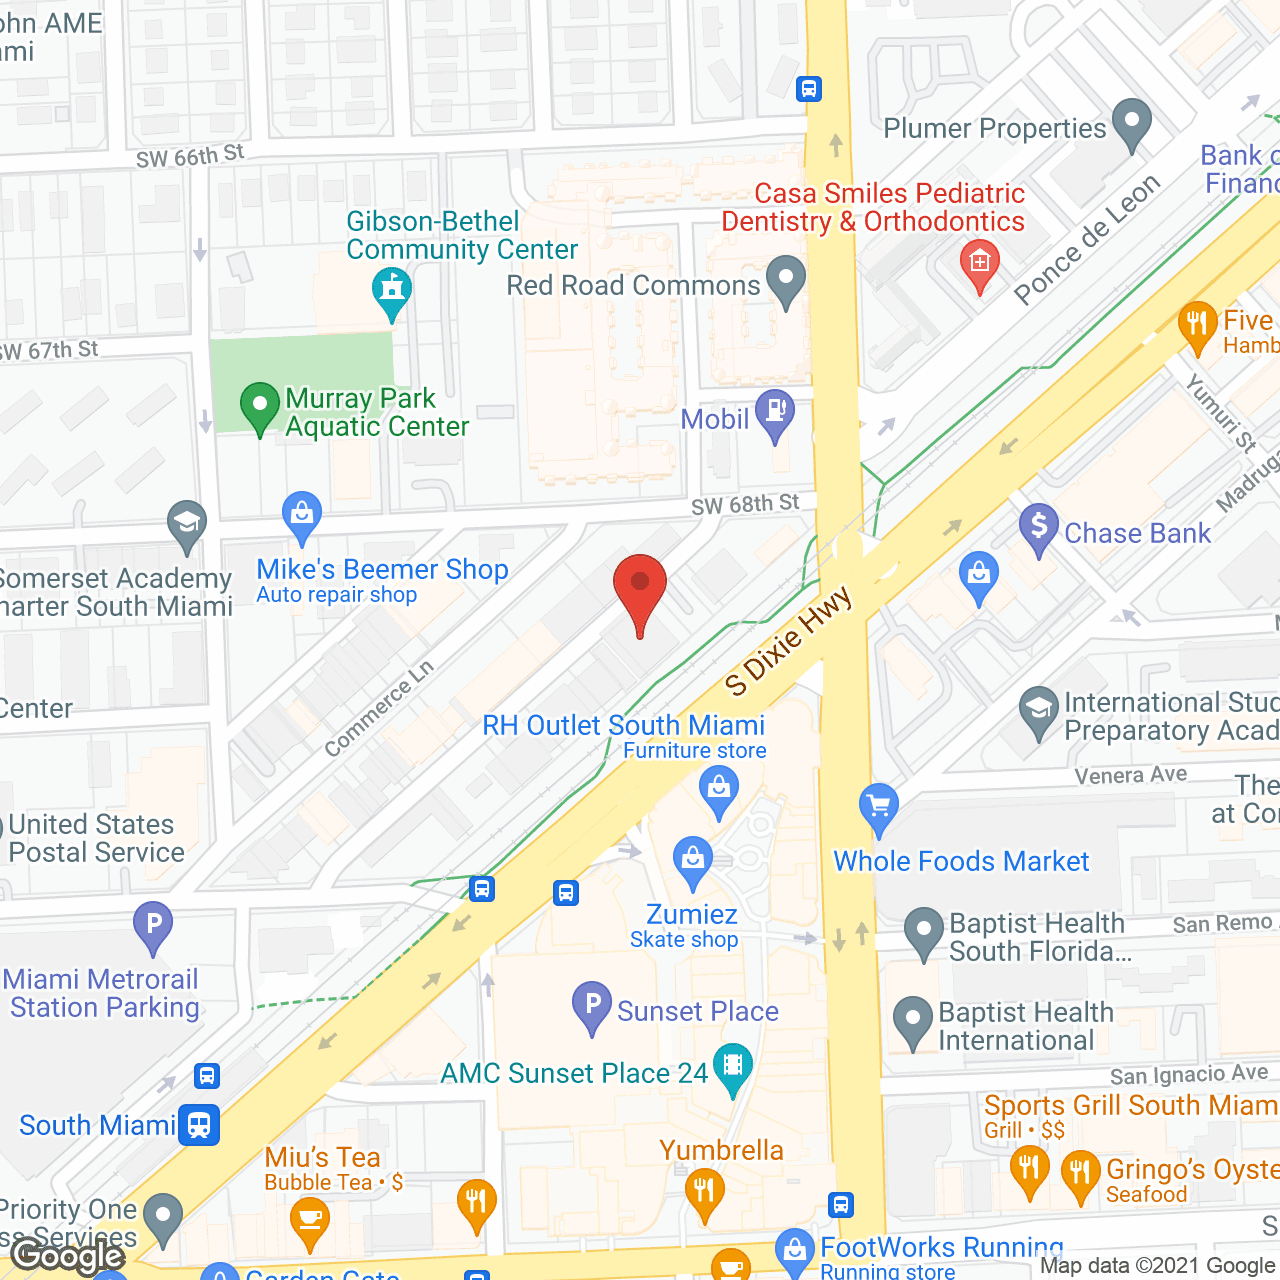 Fellowship House in google map